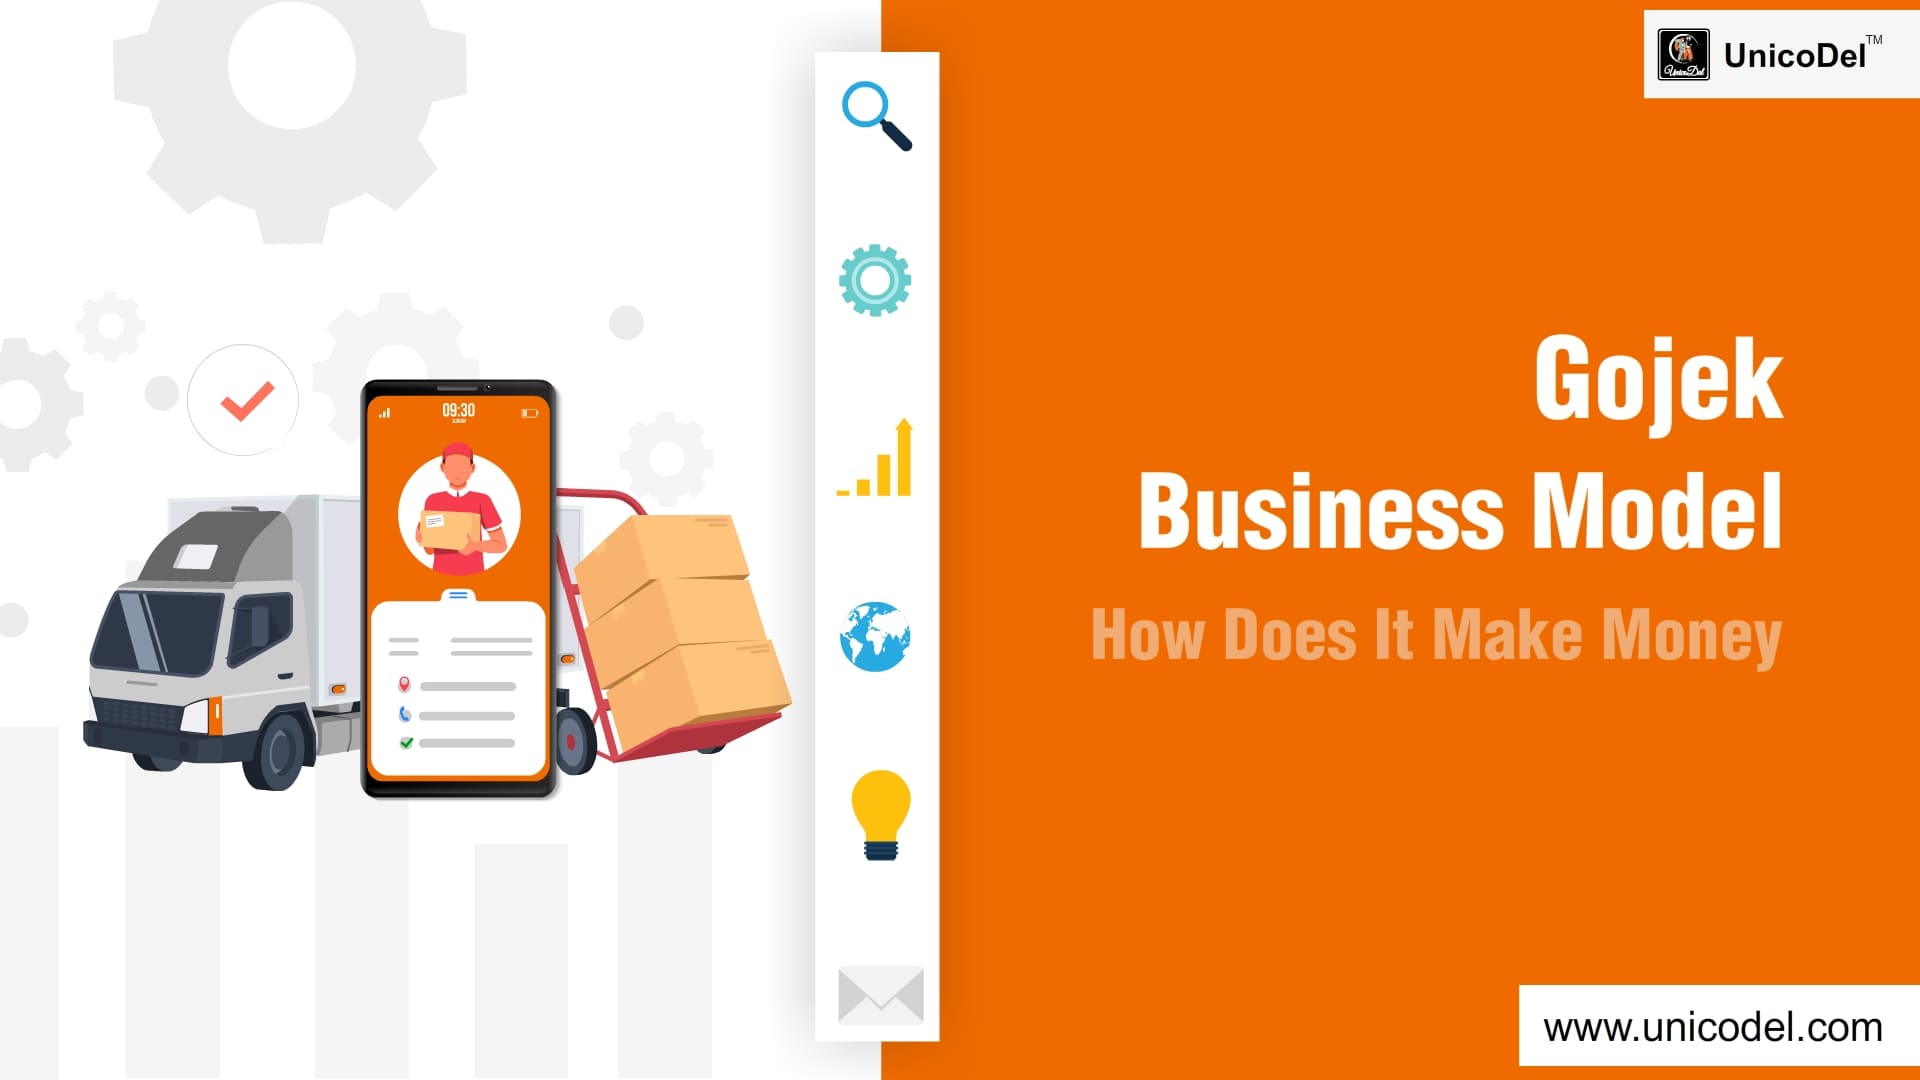 Gojek Business Model: How Does It Make Money